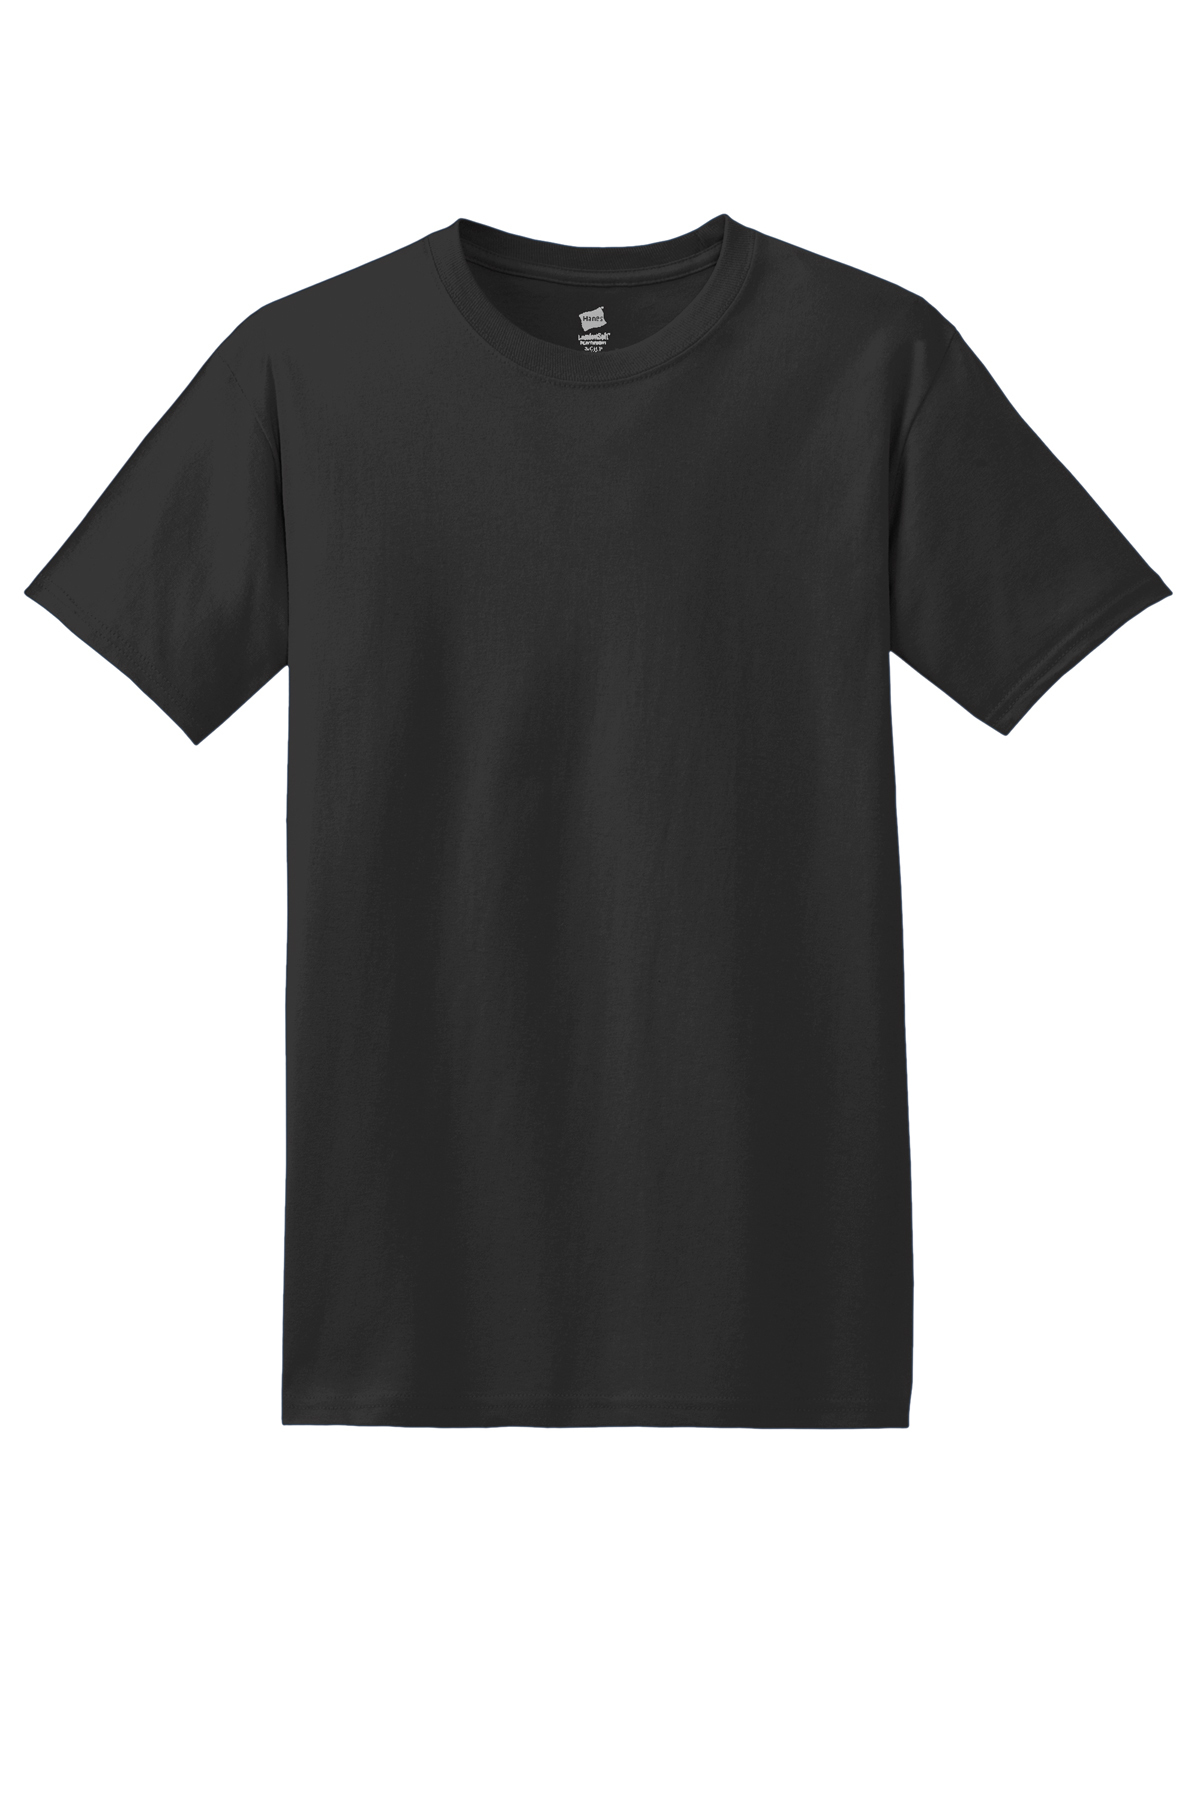 Hanes - Essential-T 100% Cotton T-Shirt | Product | SanMar